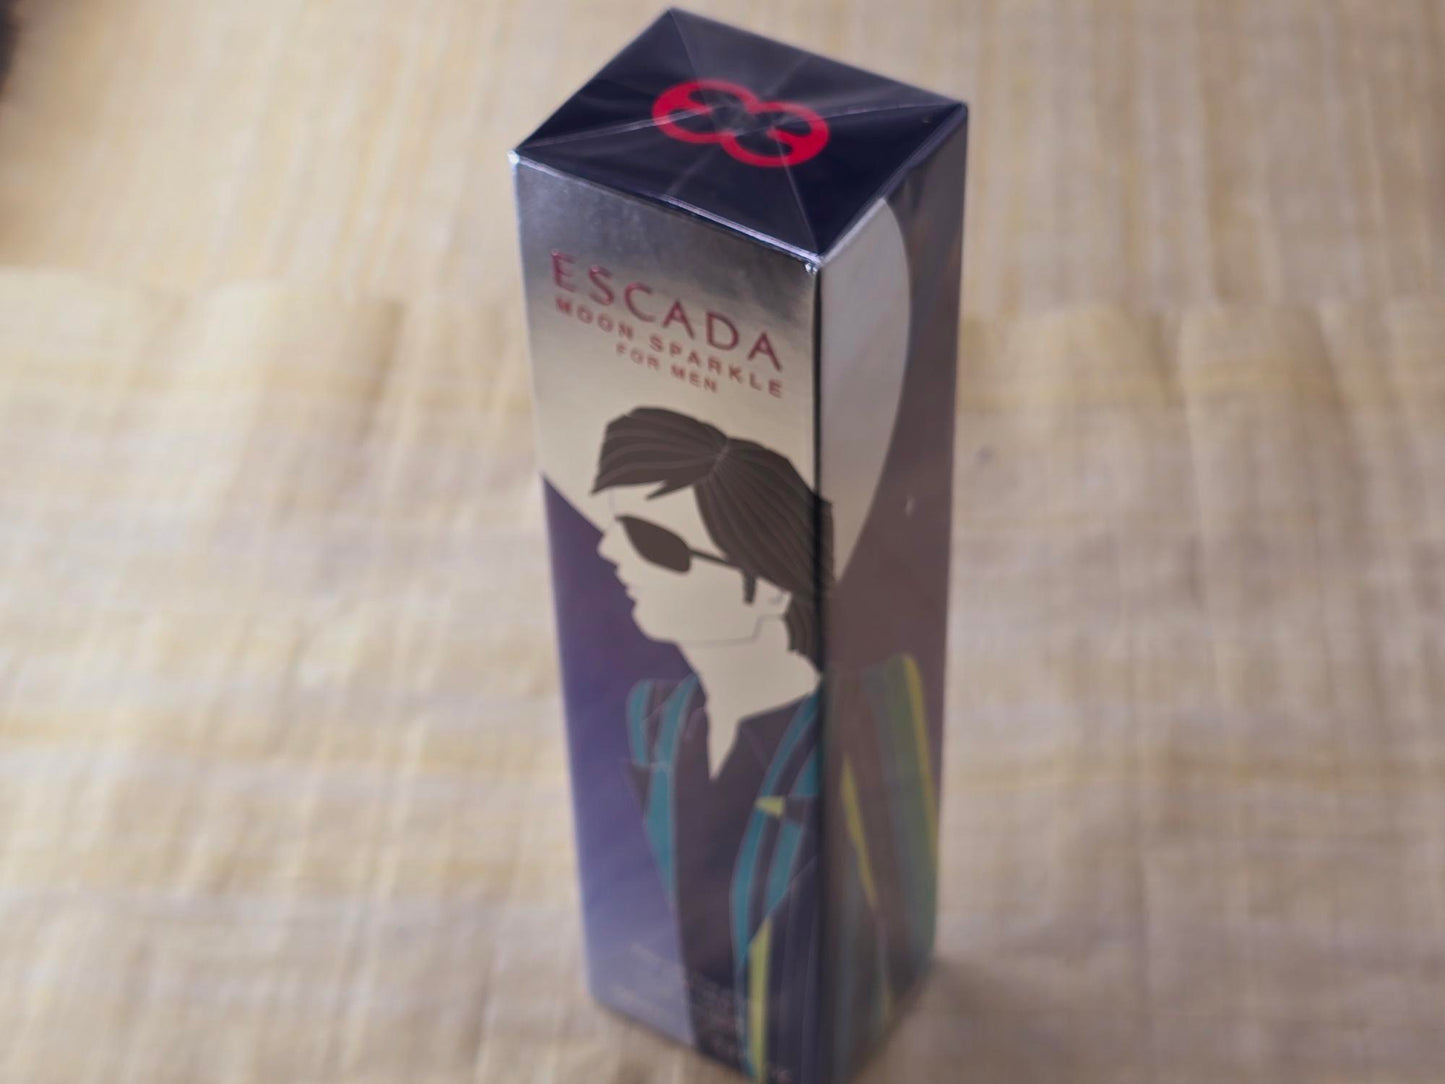 Escada Moon Sparkle pour Homme for men EDT Spray 100 ml 3.4 oz, Vintage, Rare, Sealed (Copy)